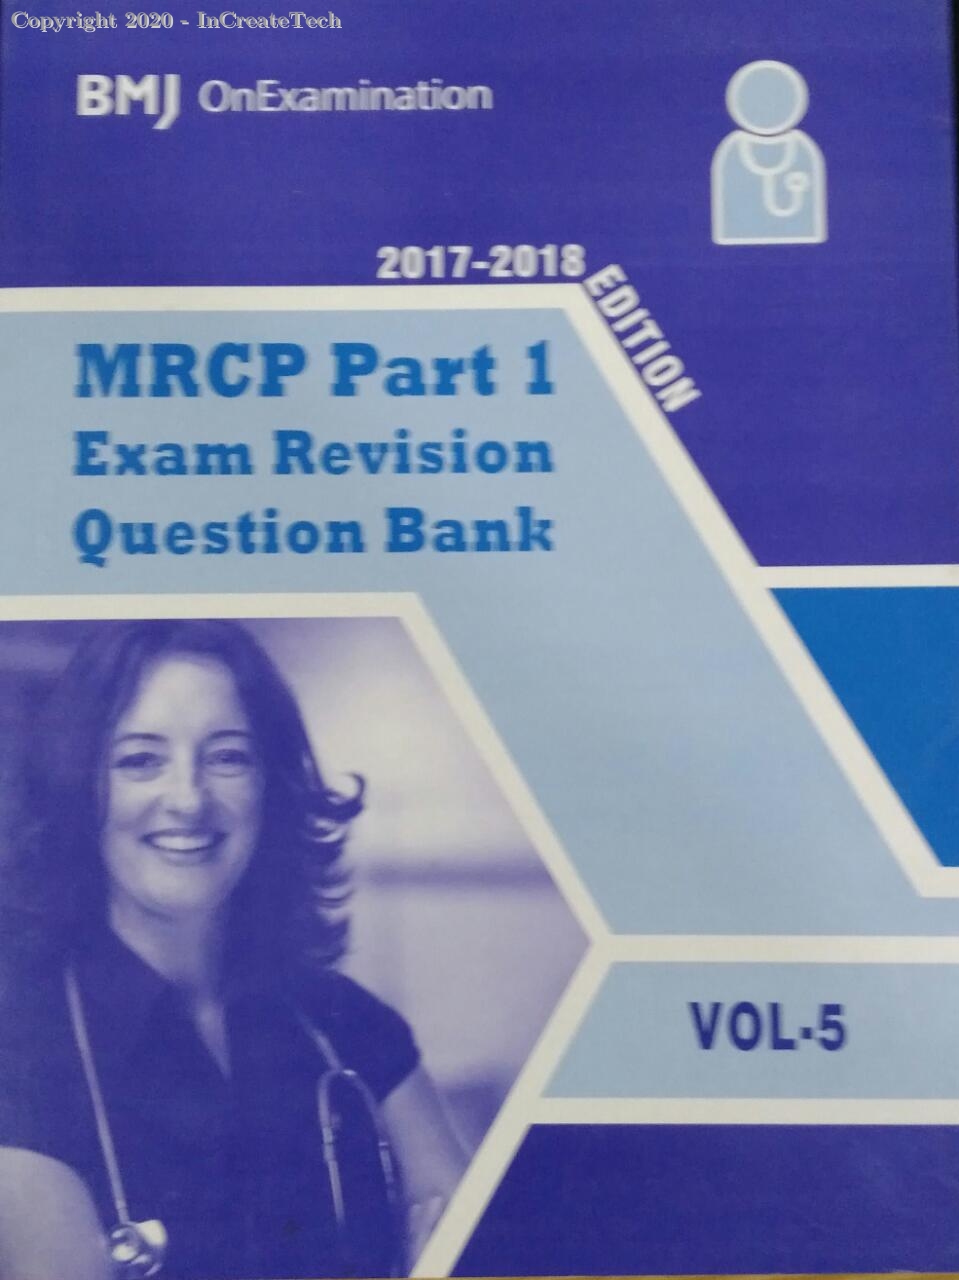 MRCP PART 1 EXAM REVISION QUESTION BANK, 5 VOL